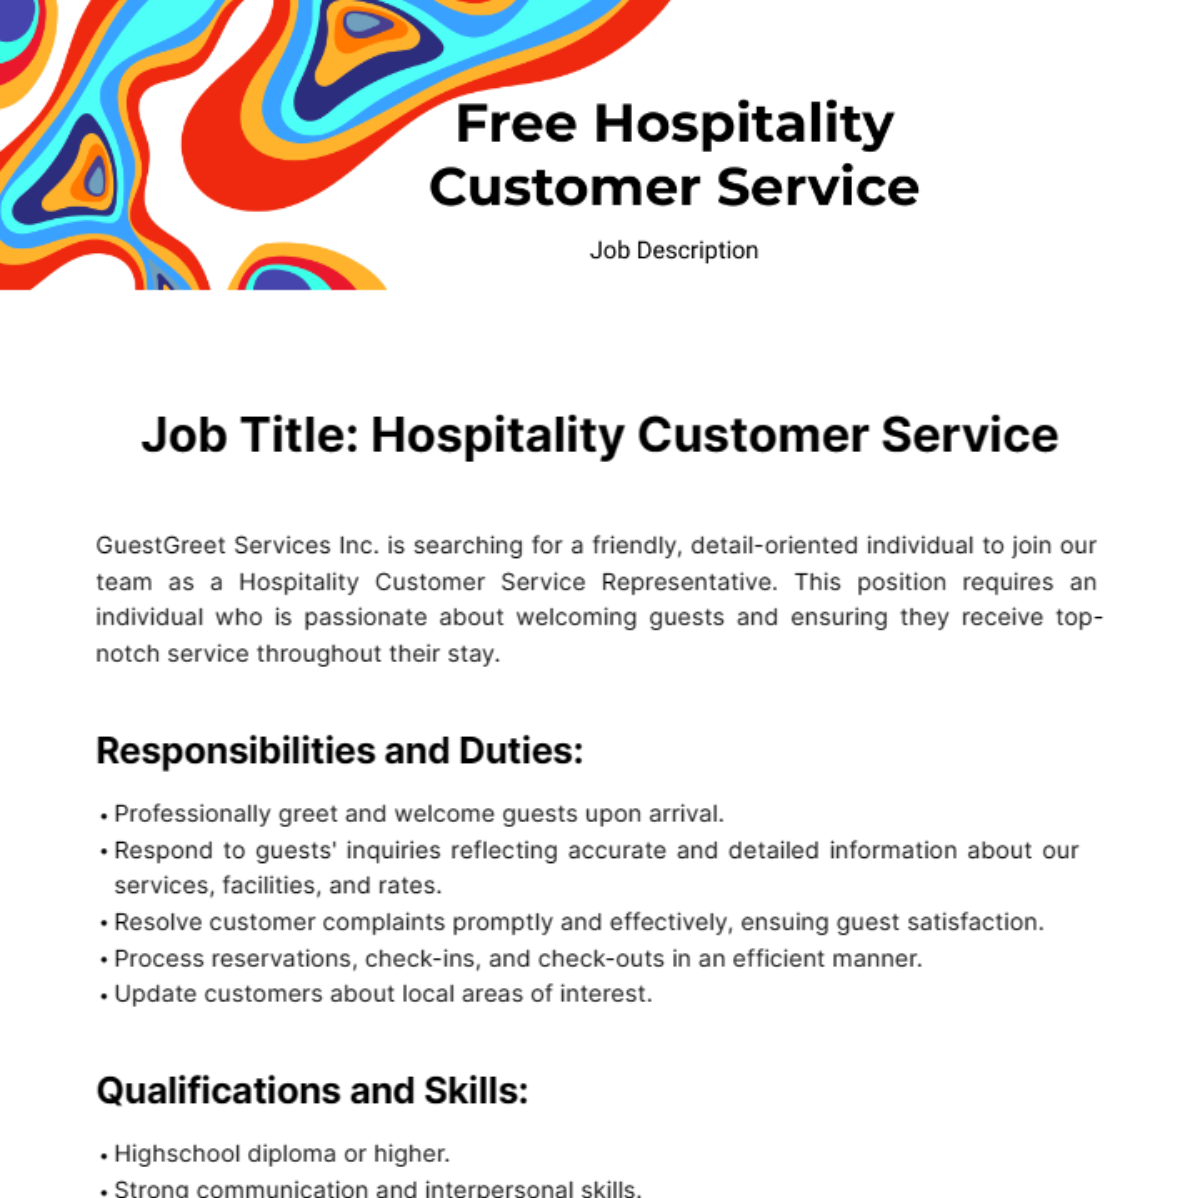 Free Hospitality Customer Service Job Description Template